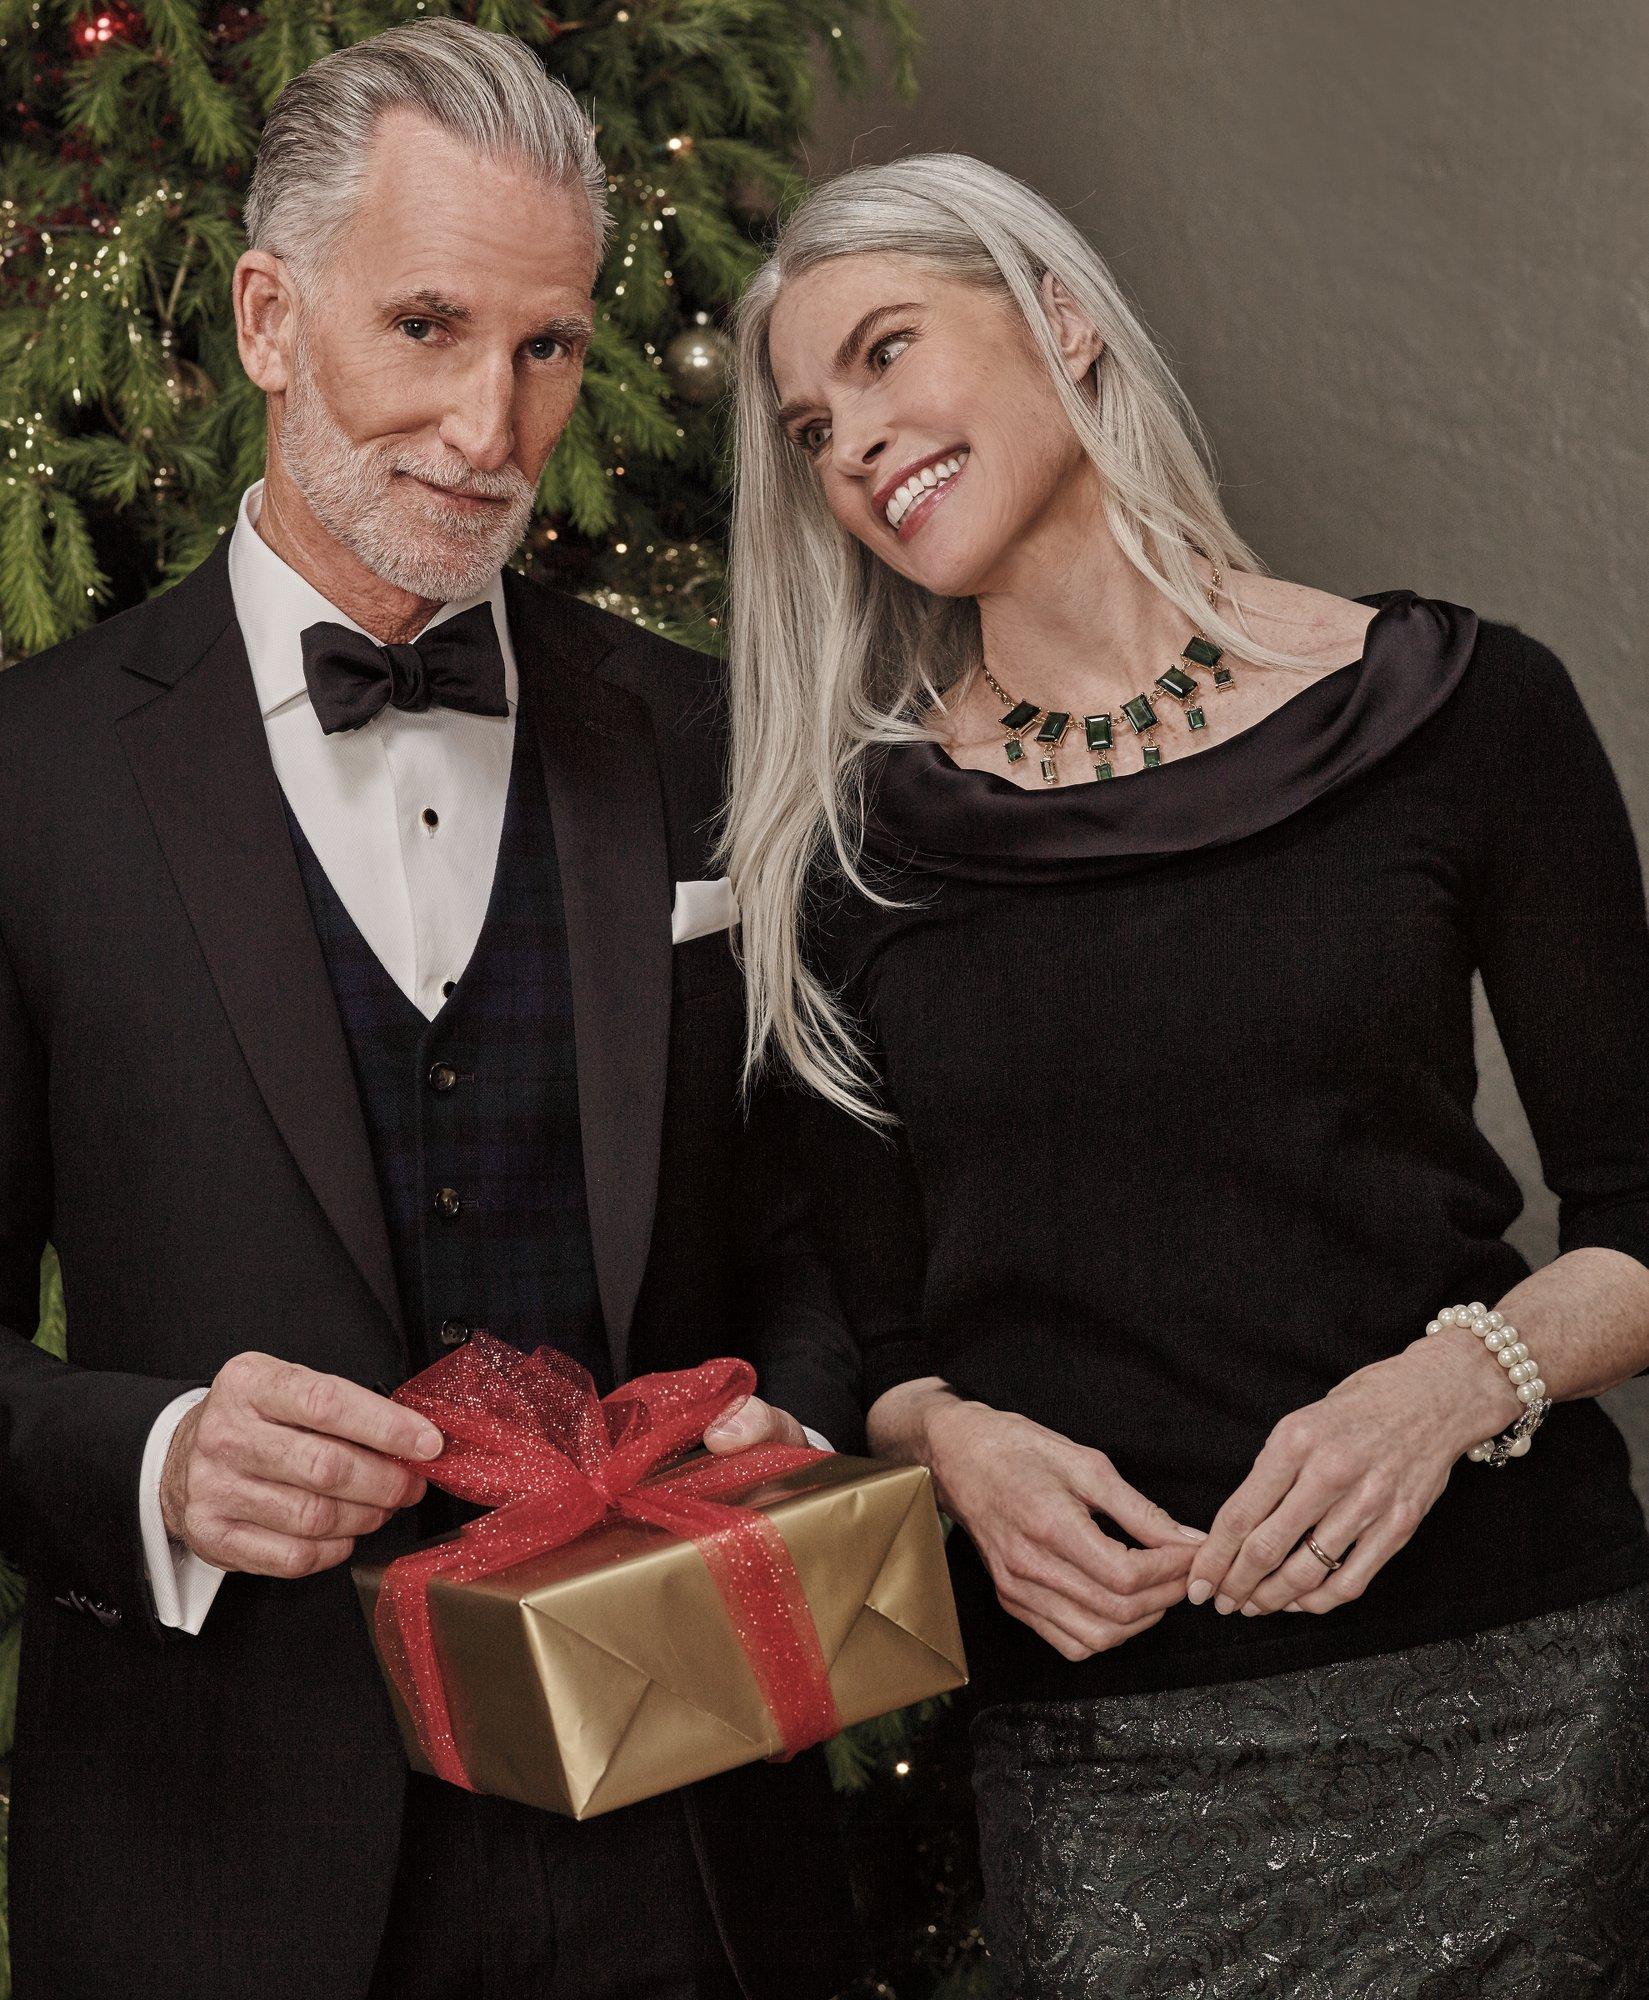 Burgundy & White Christmas Self-Tie Bow Tie, In stock!